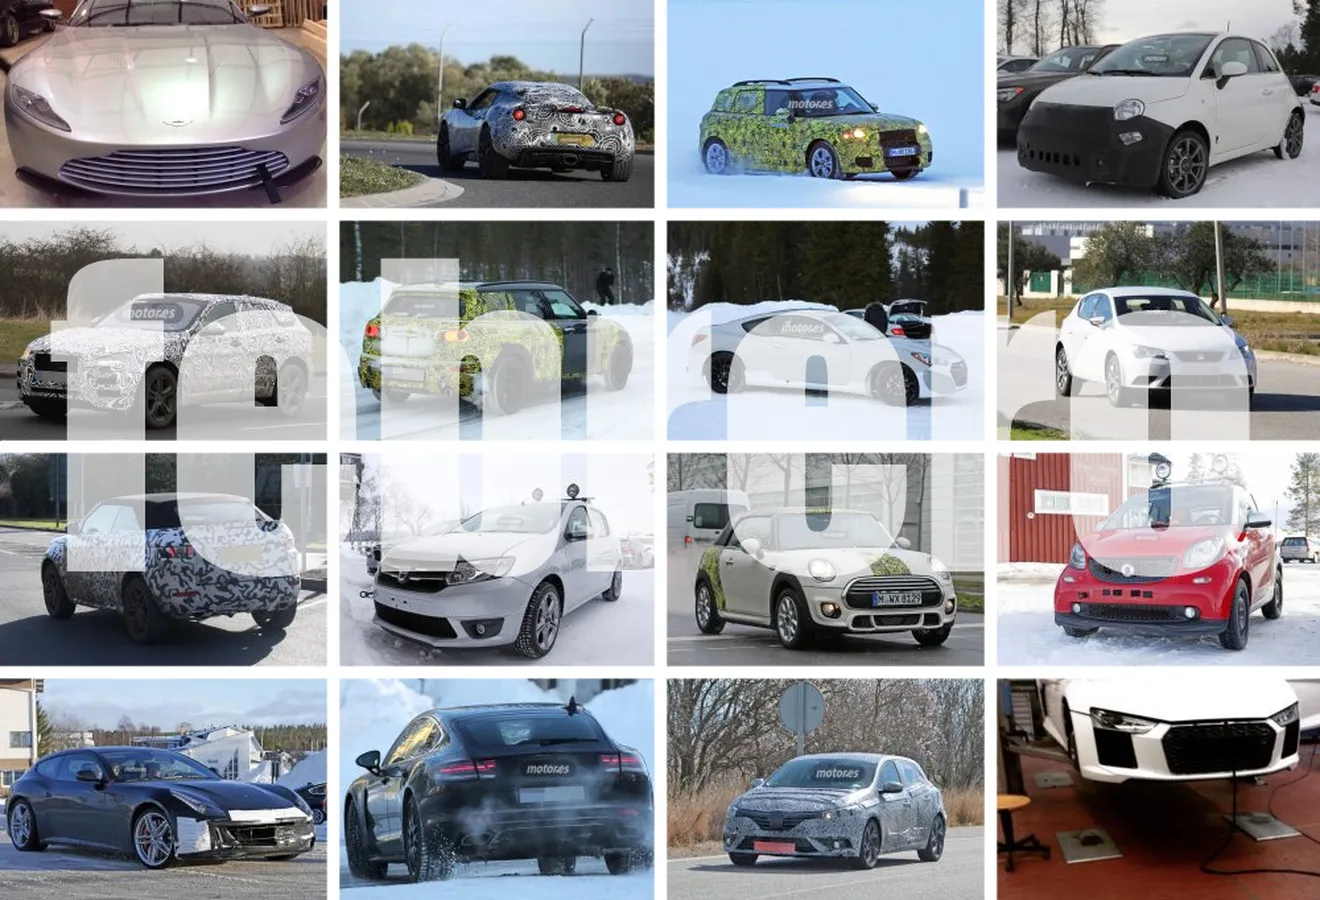  Jaguar F-Pace, Renault Megane 2016, Ferrari FF, Range Rover hybrid: Fotos espía Febrero 2015